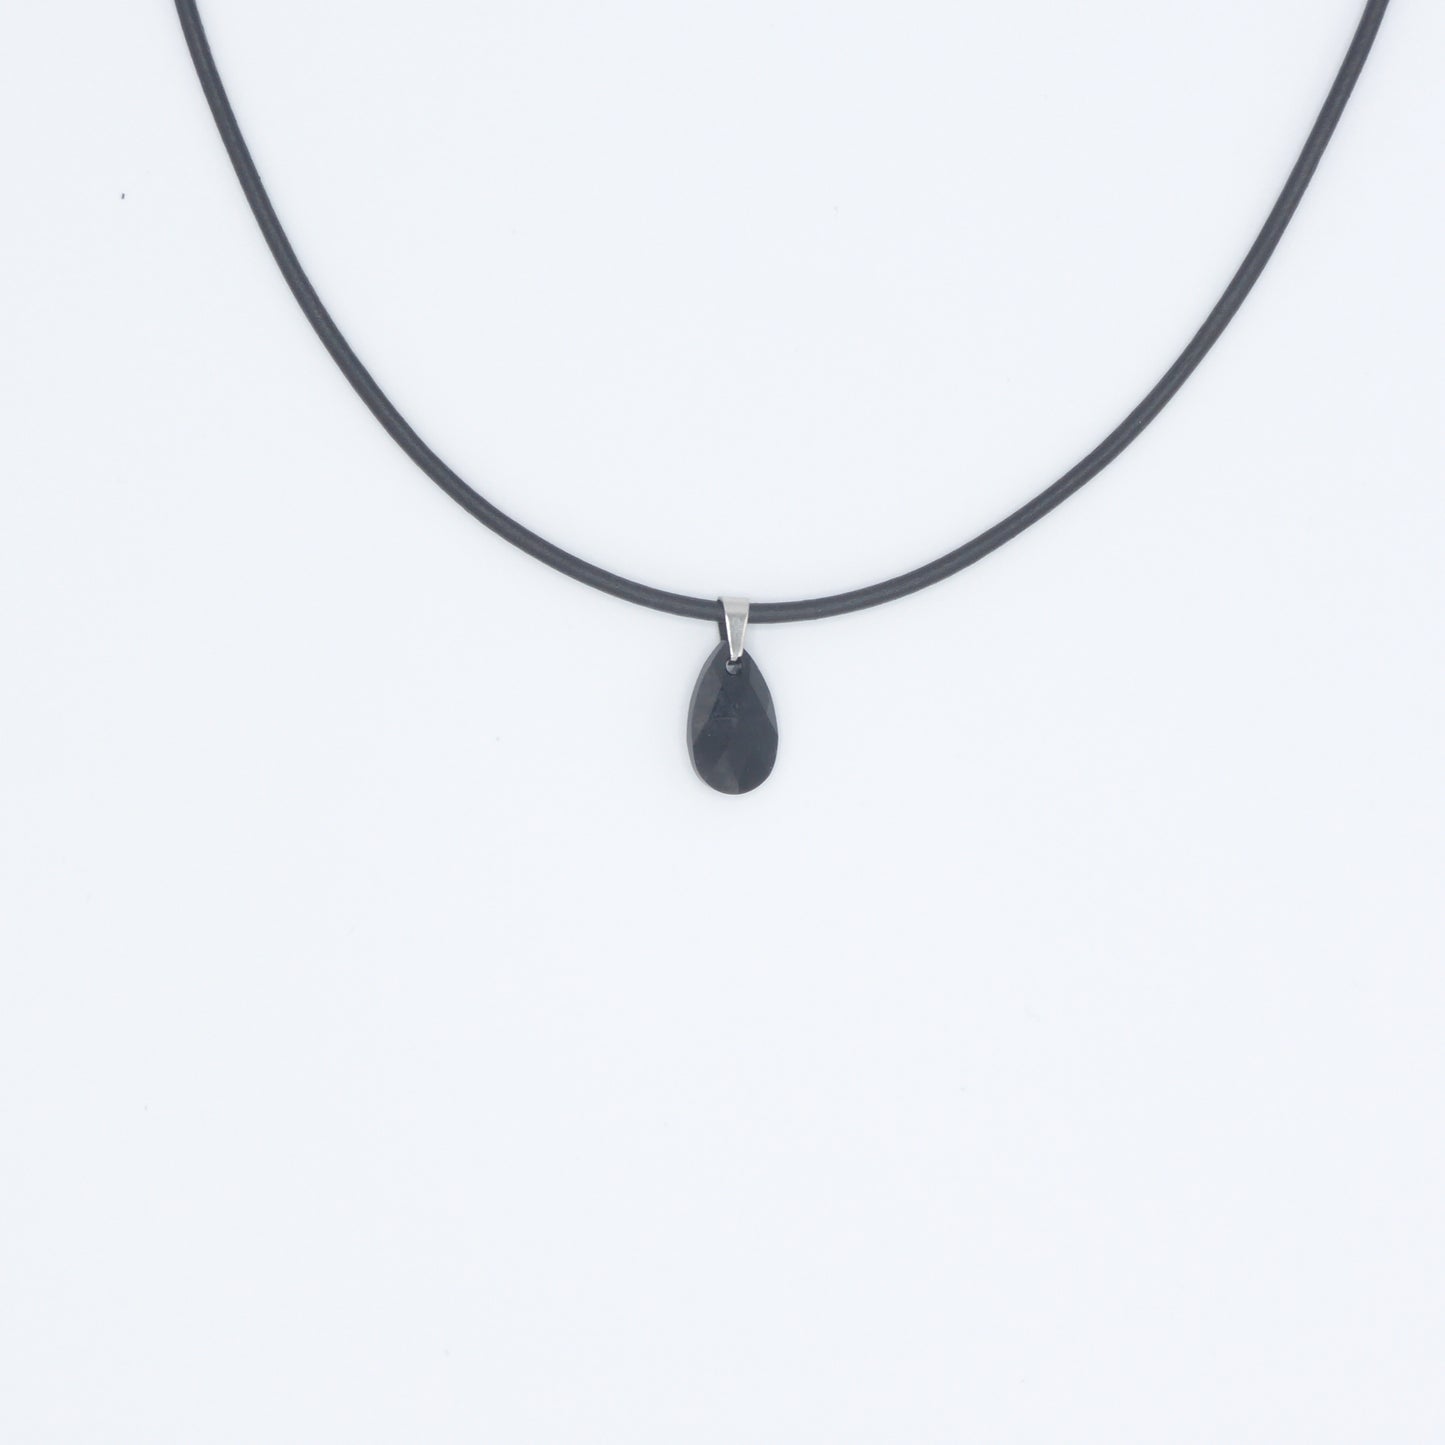 Leather necklace with black Swarovski Elements drop